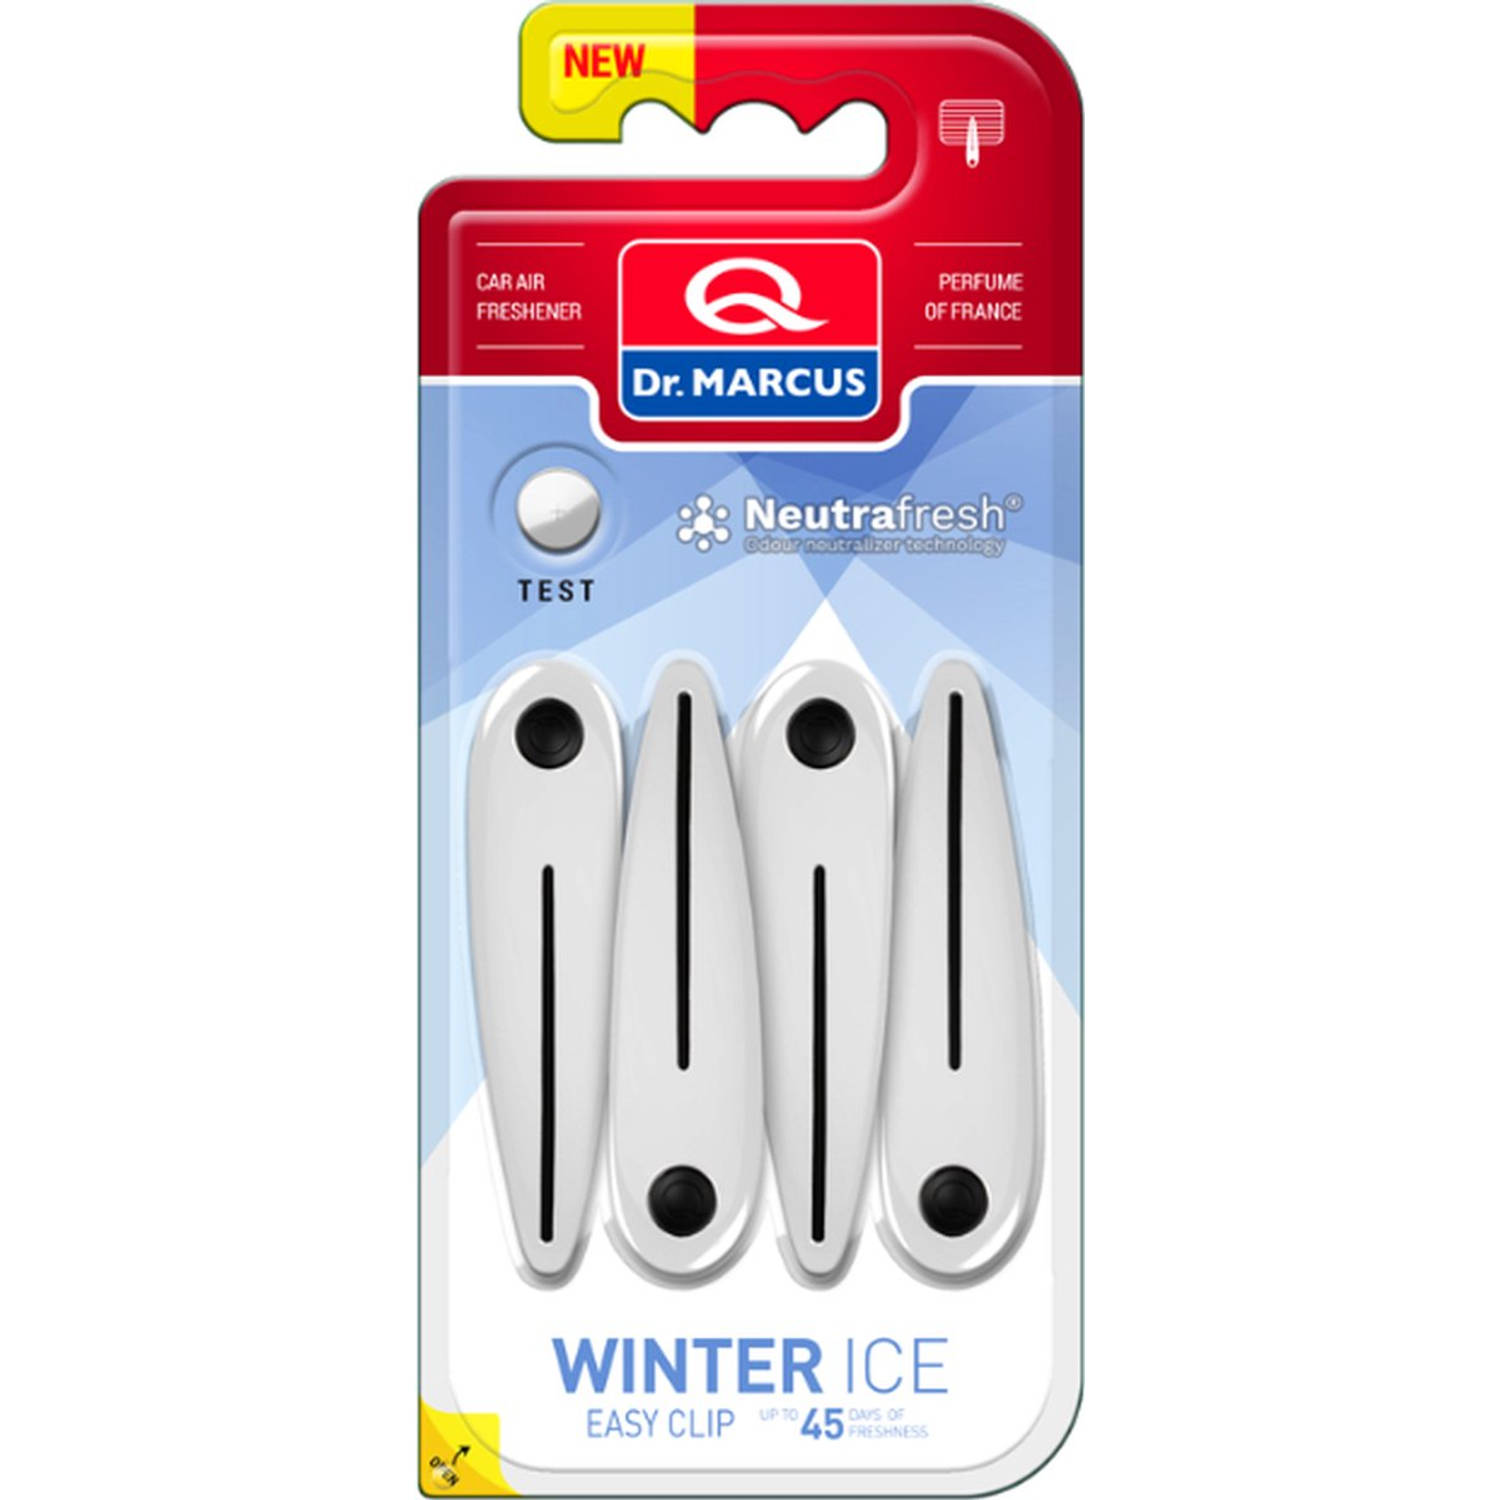 Dr. Marcus Easy Clip Winter Ice luchtverfrisser met neutrafresh technologie - 4 clips voor 4 sterktes